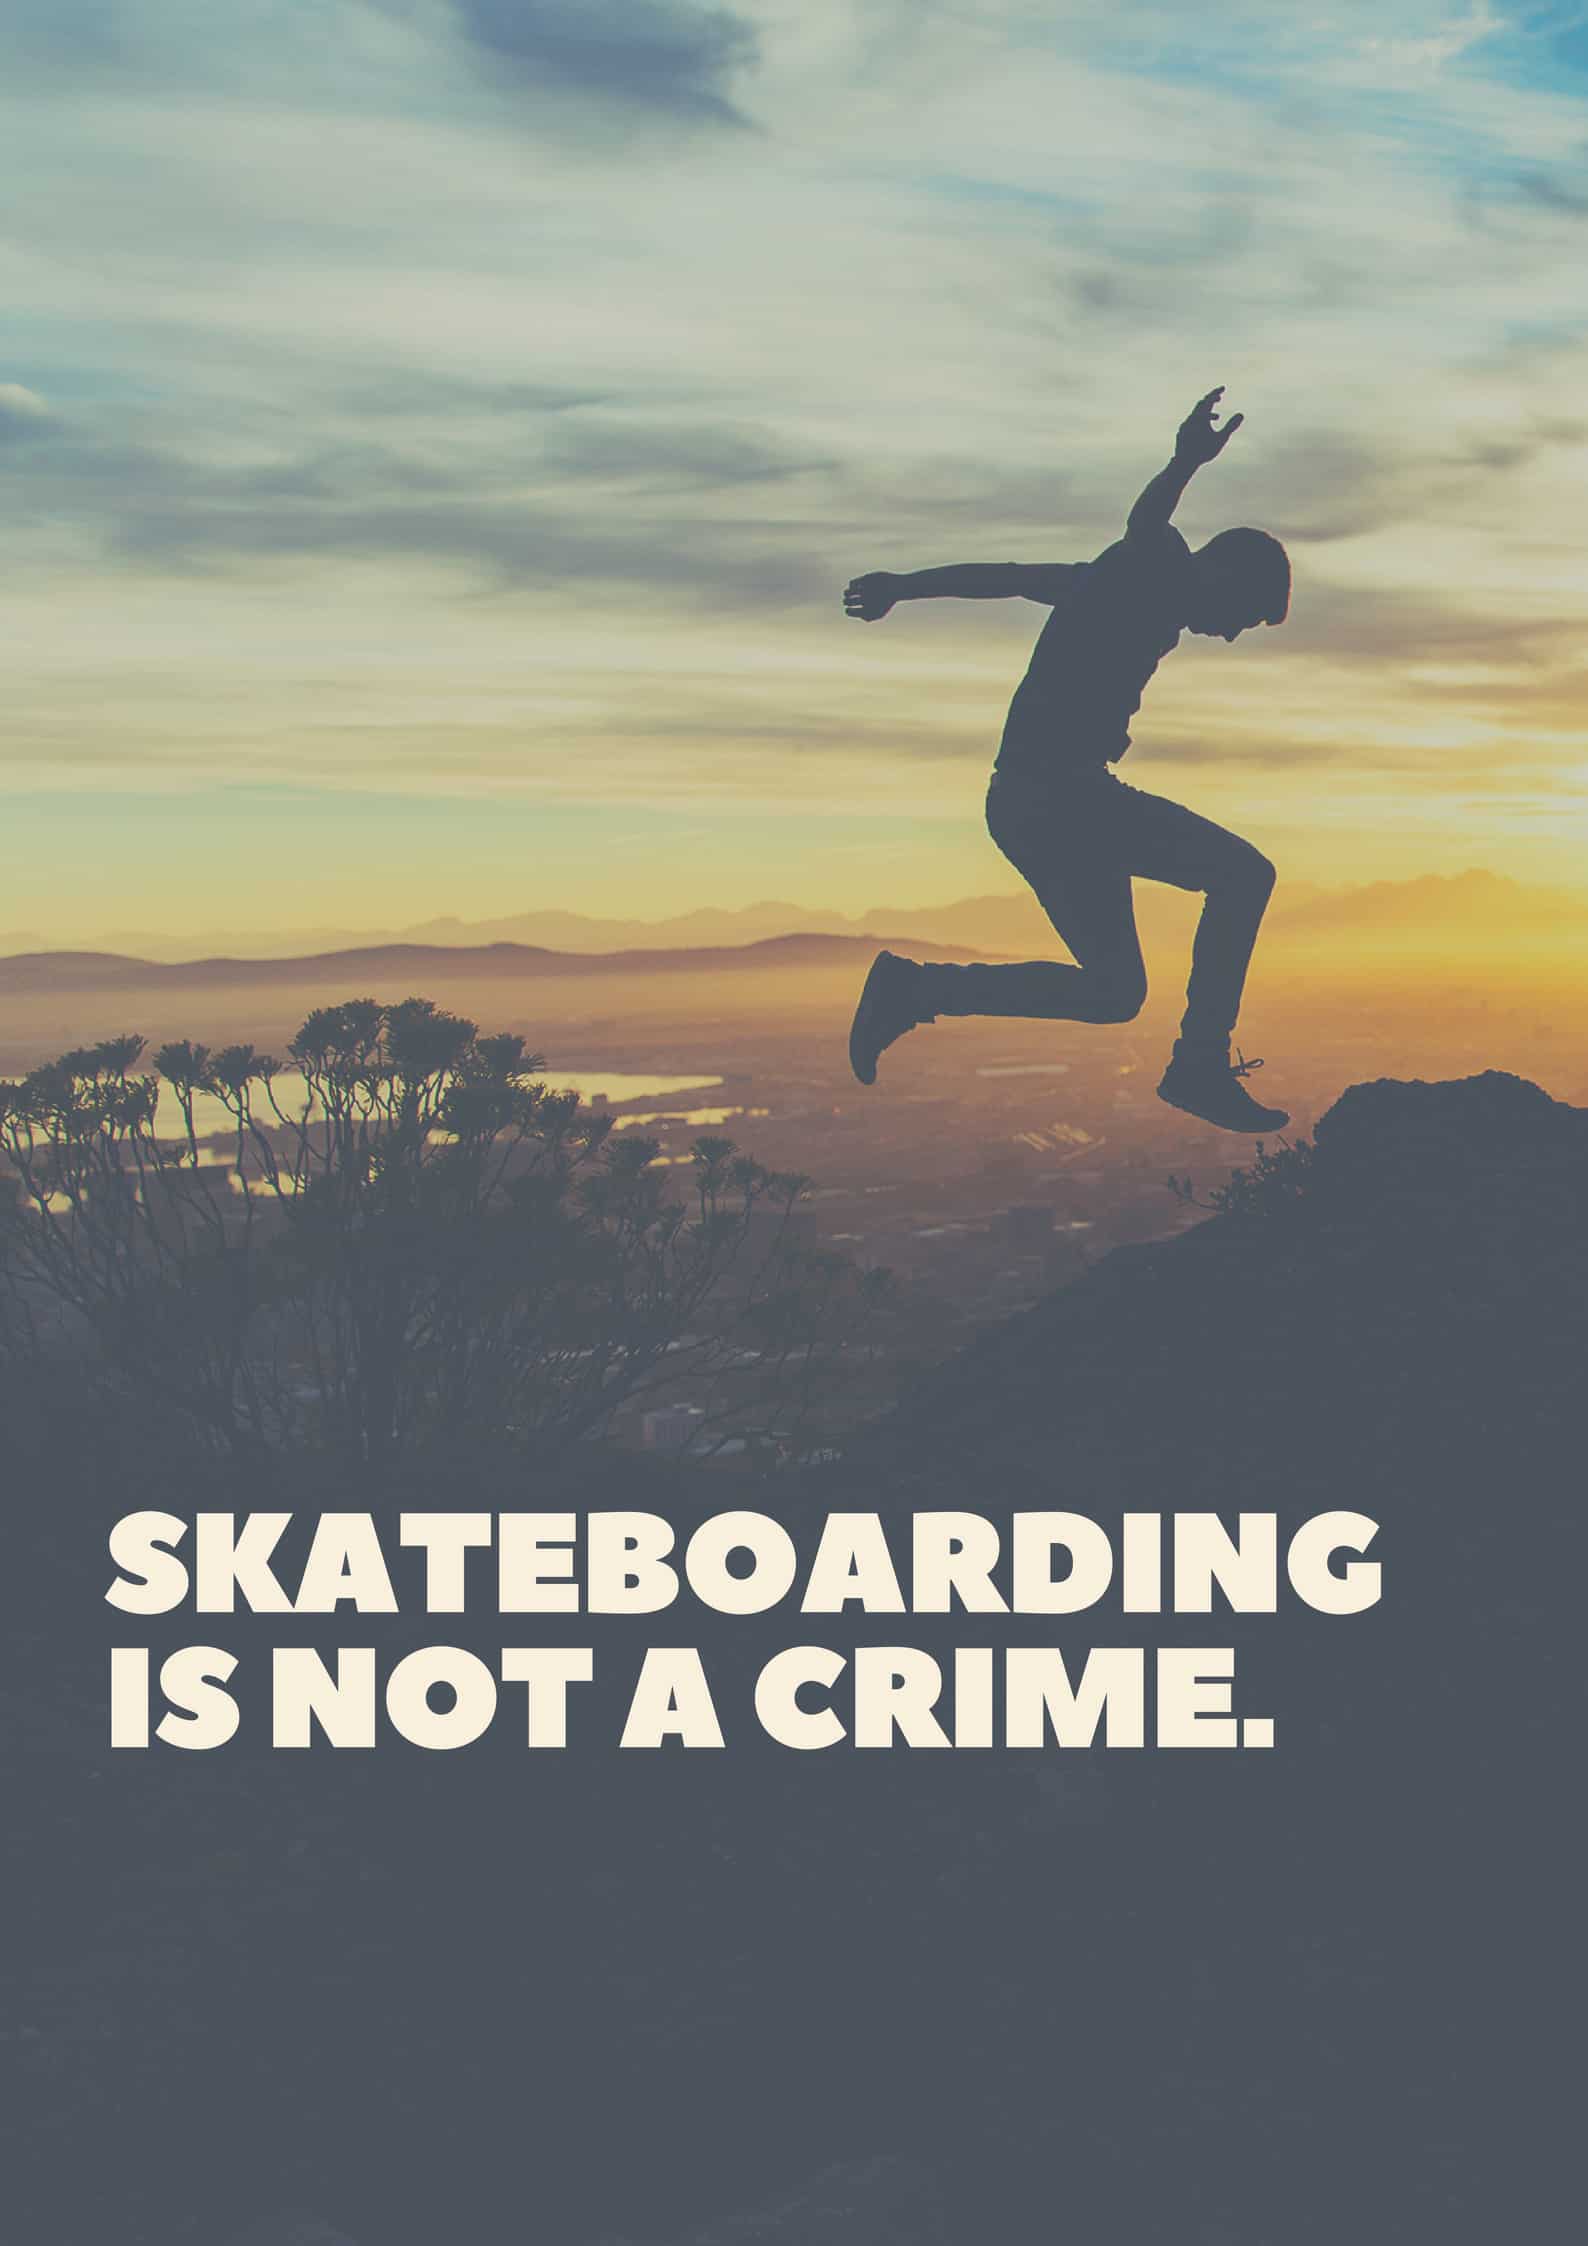 Skateboarding is not a crime.